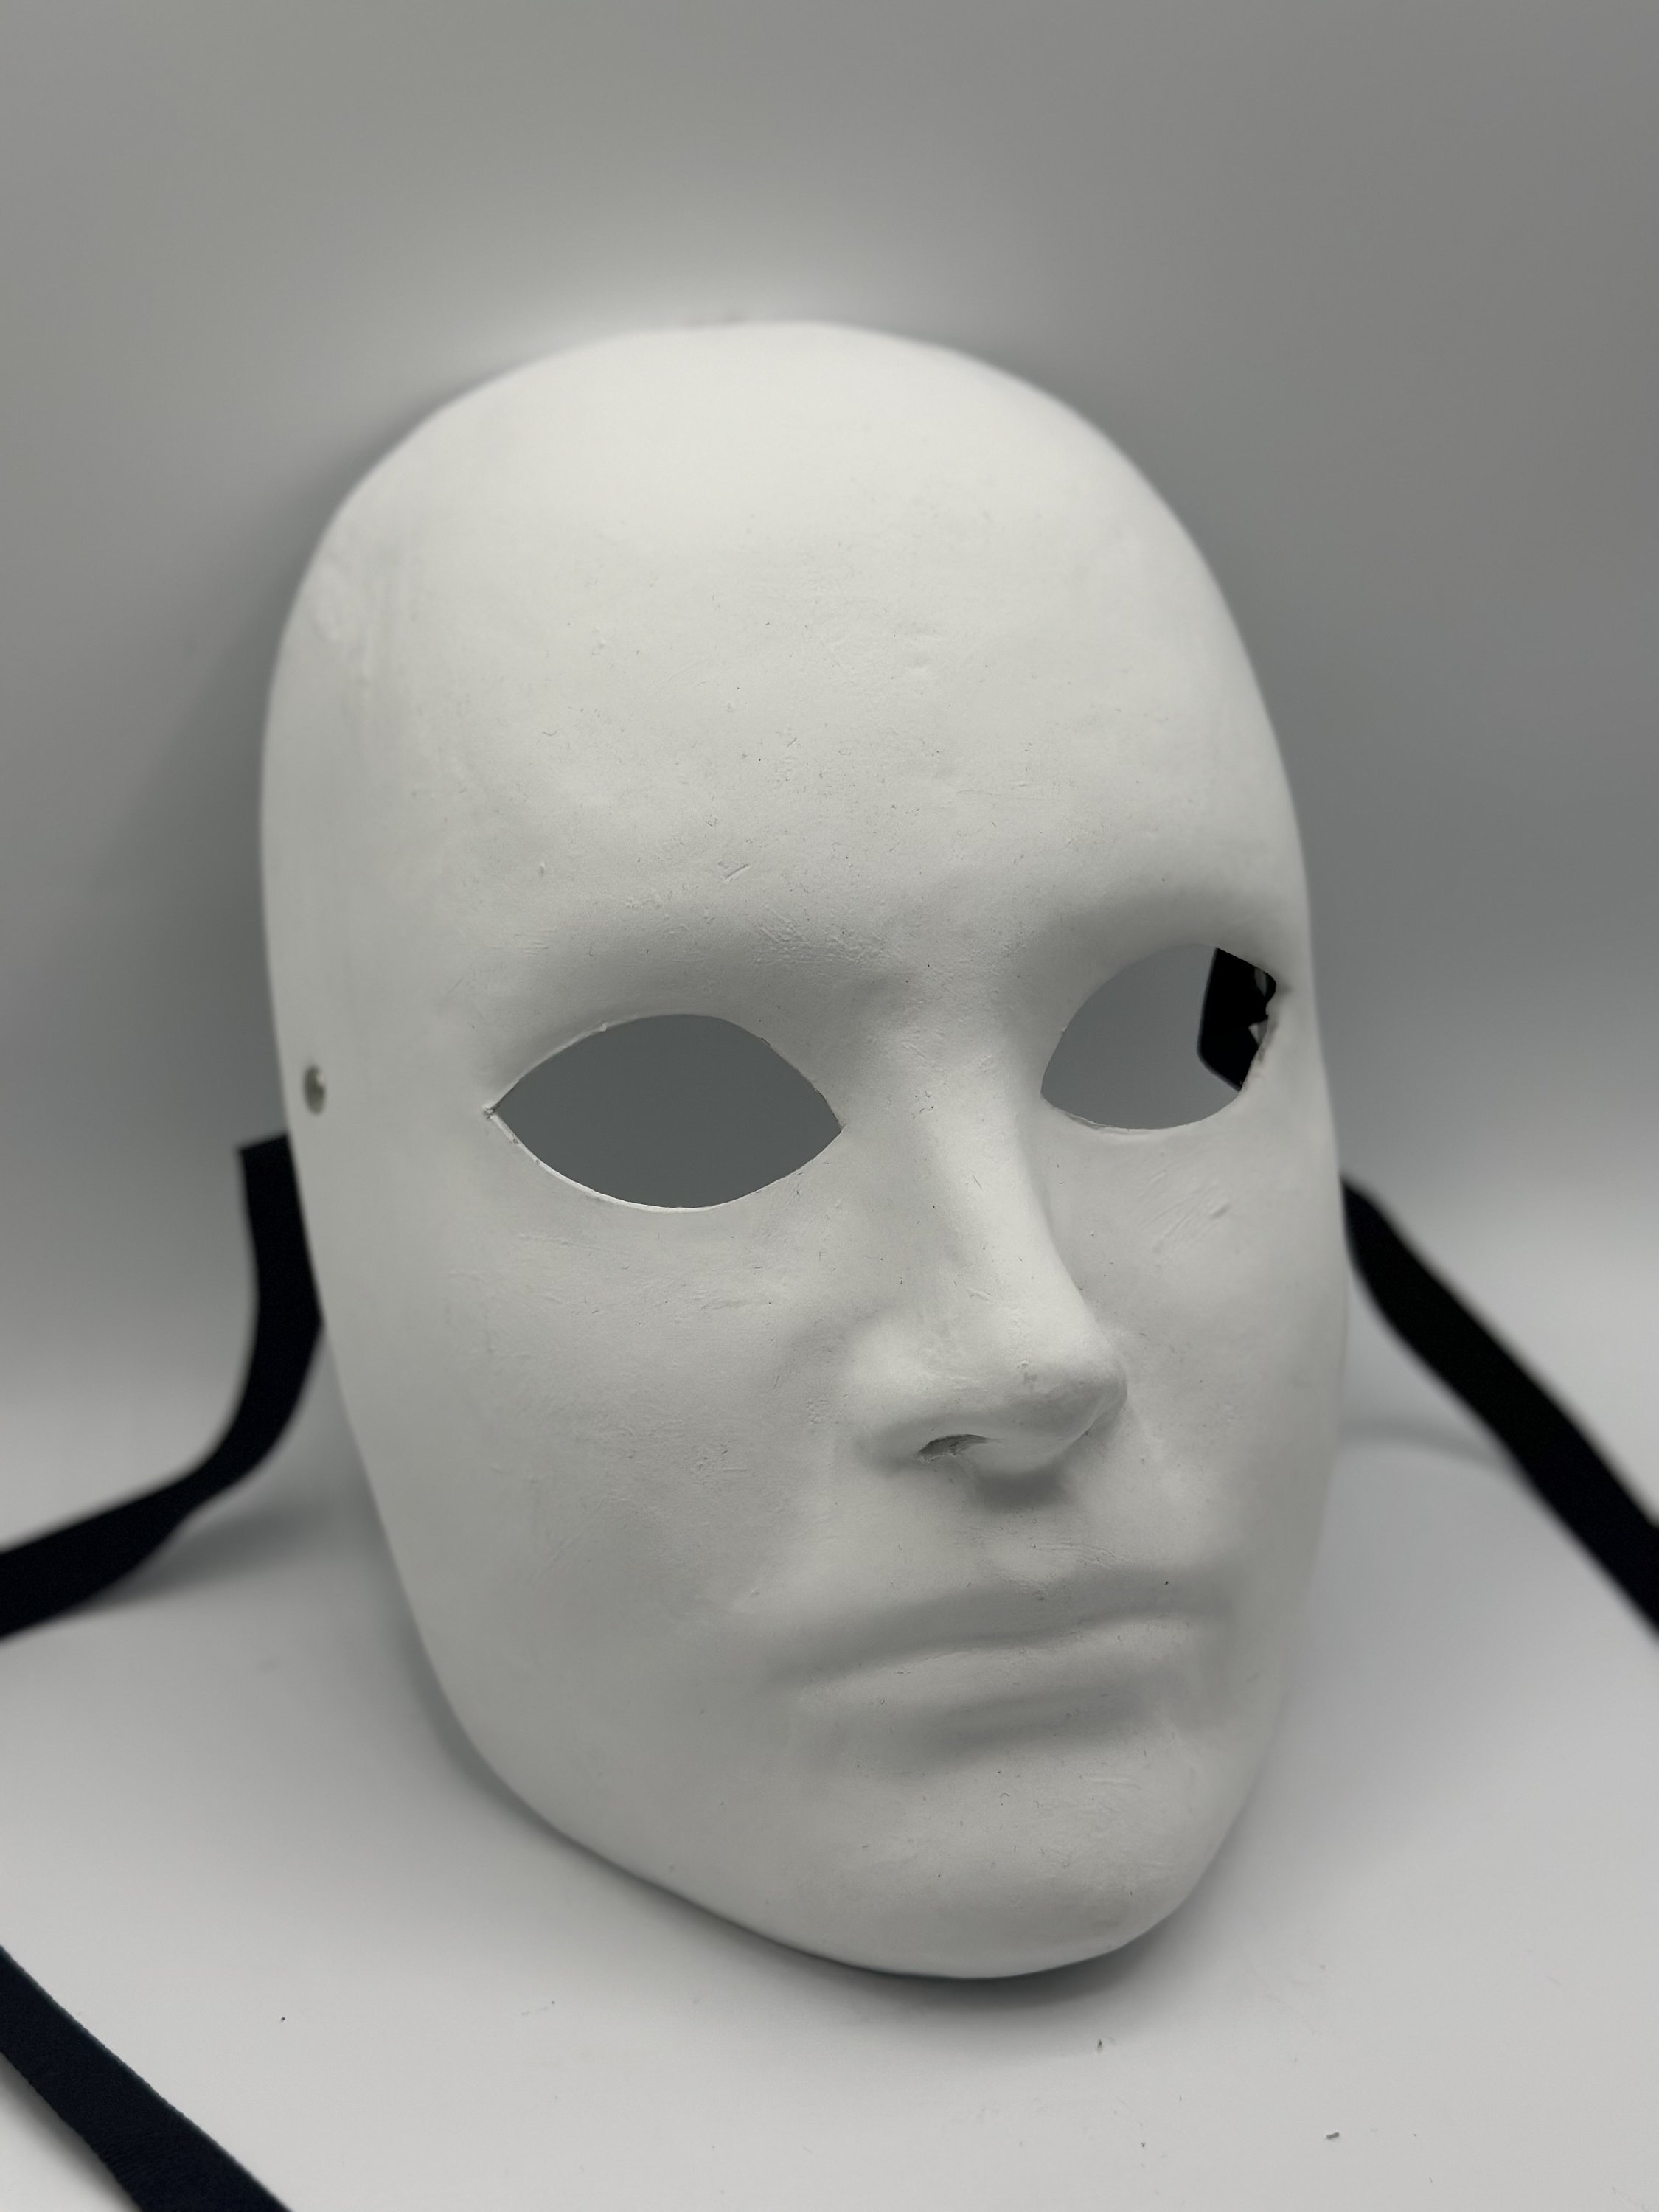 Unpainted Paper Mache Full Face Mask